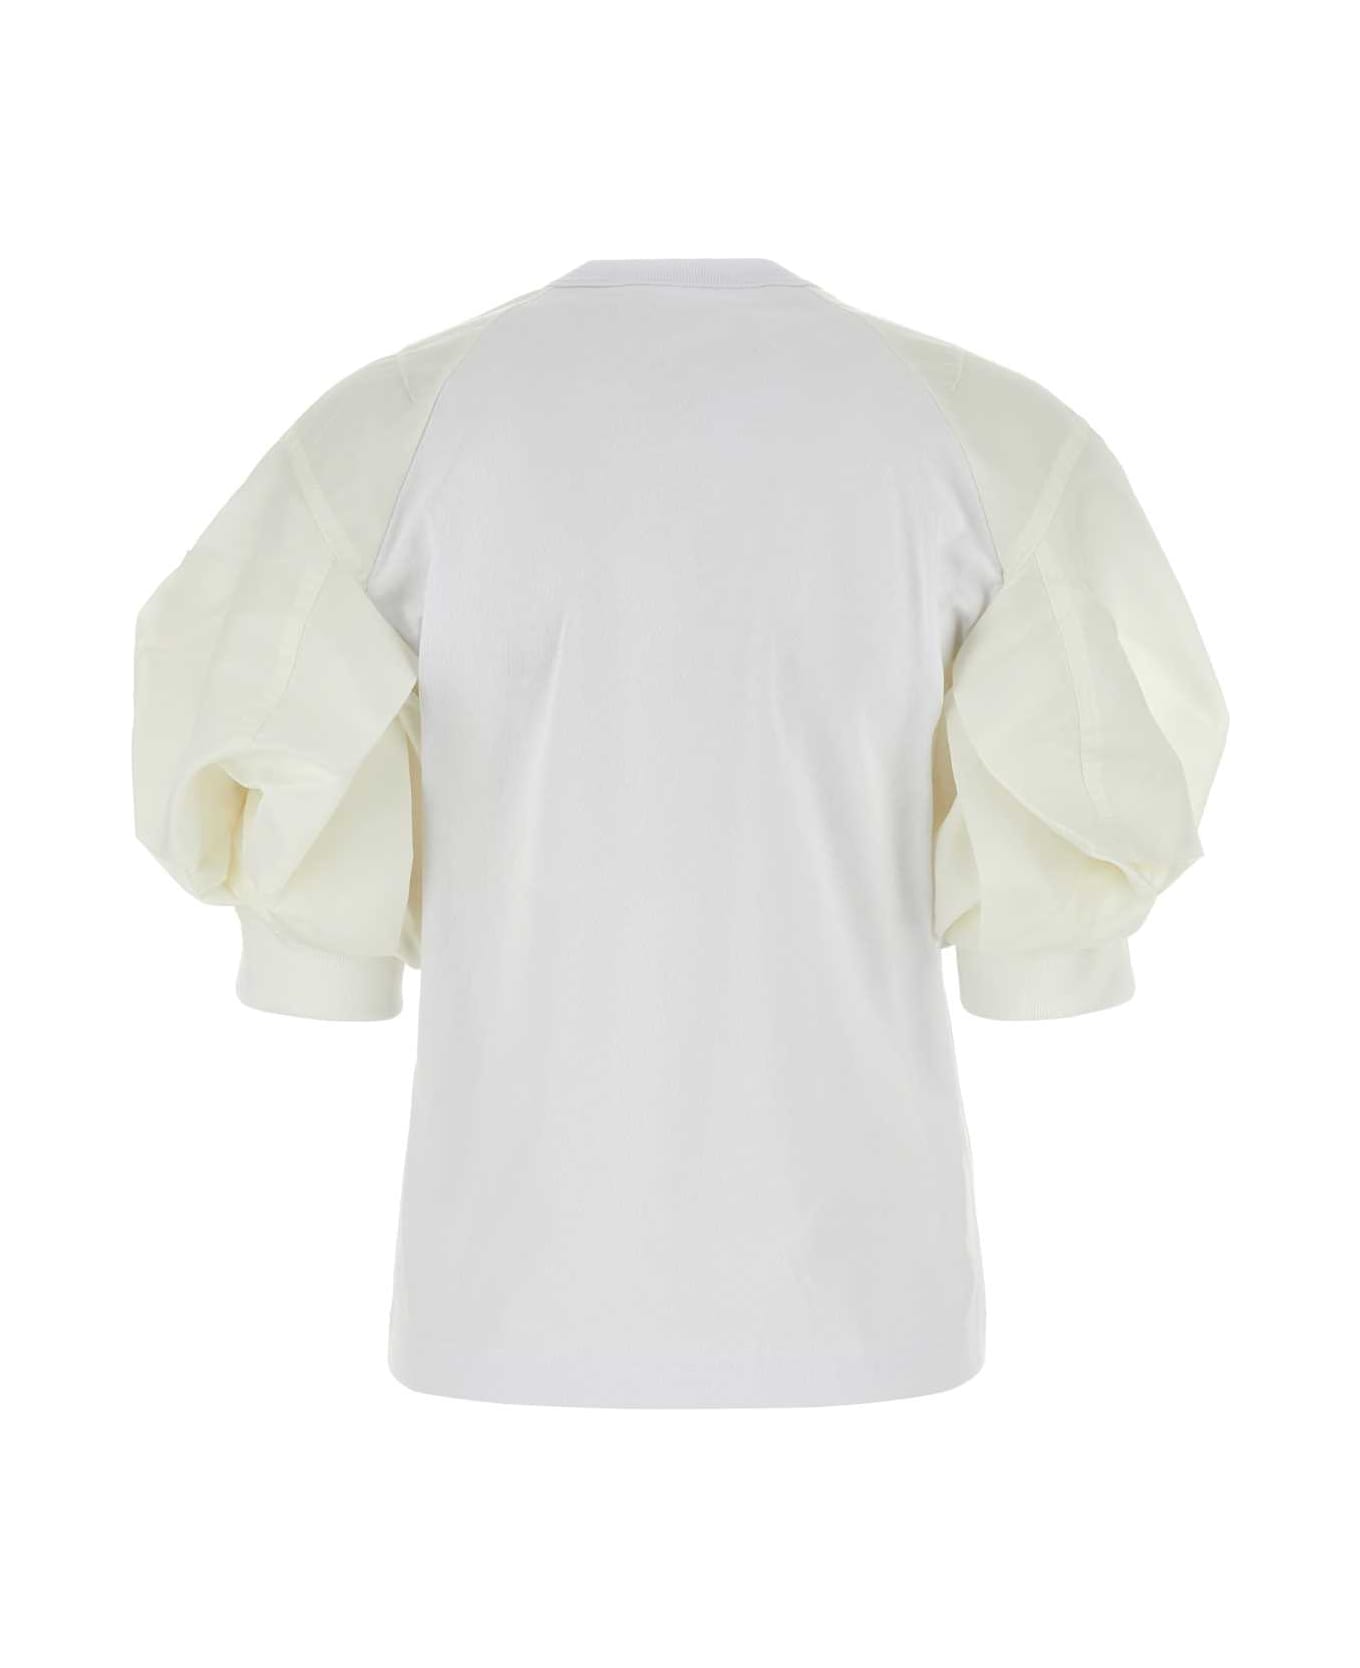 Sacai White Cotton T-shirt - WHITE